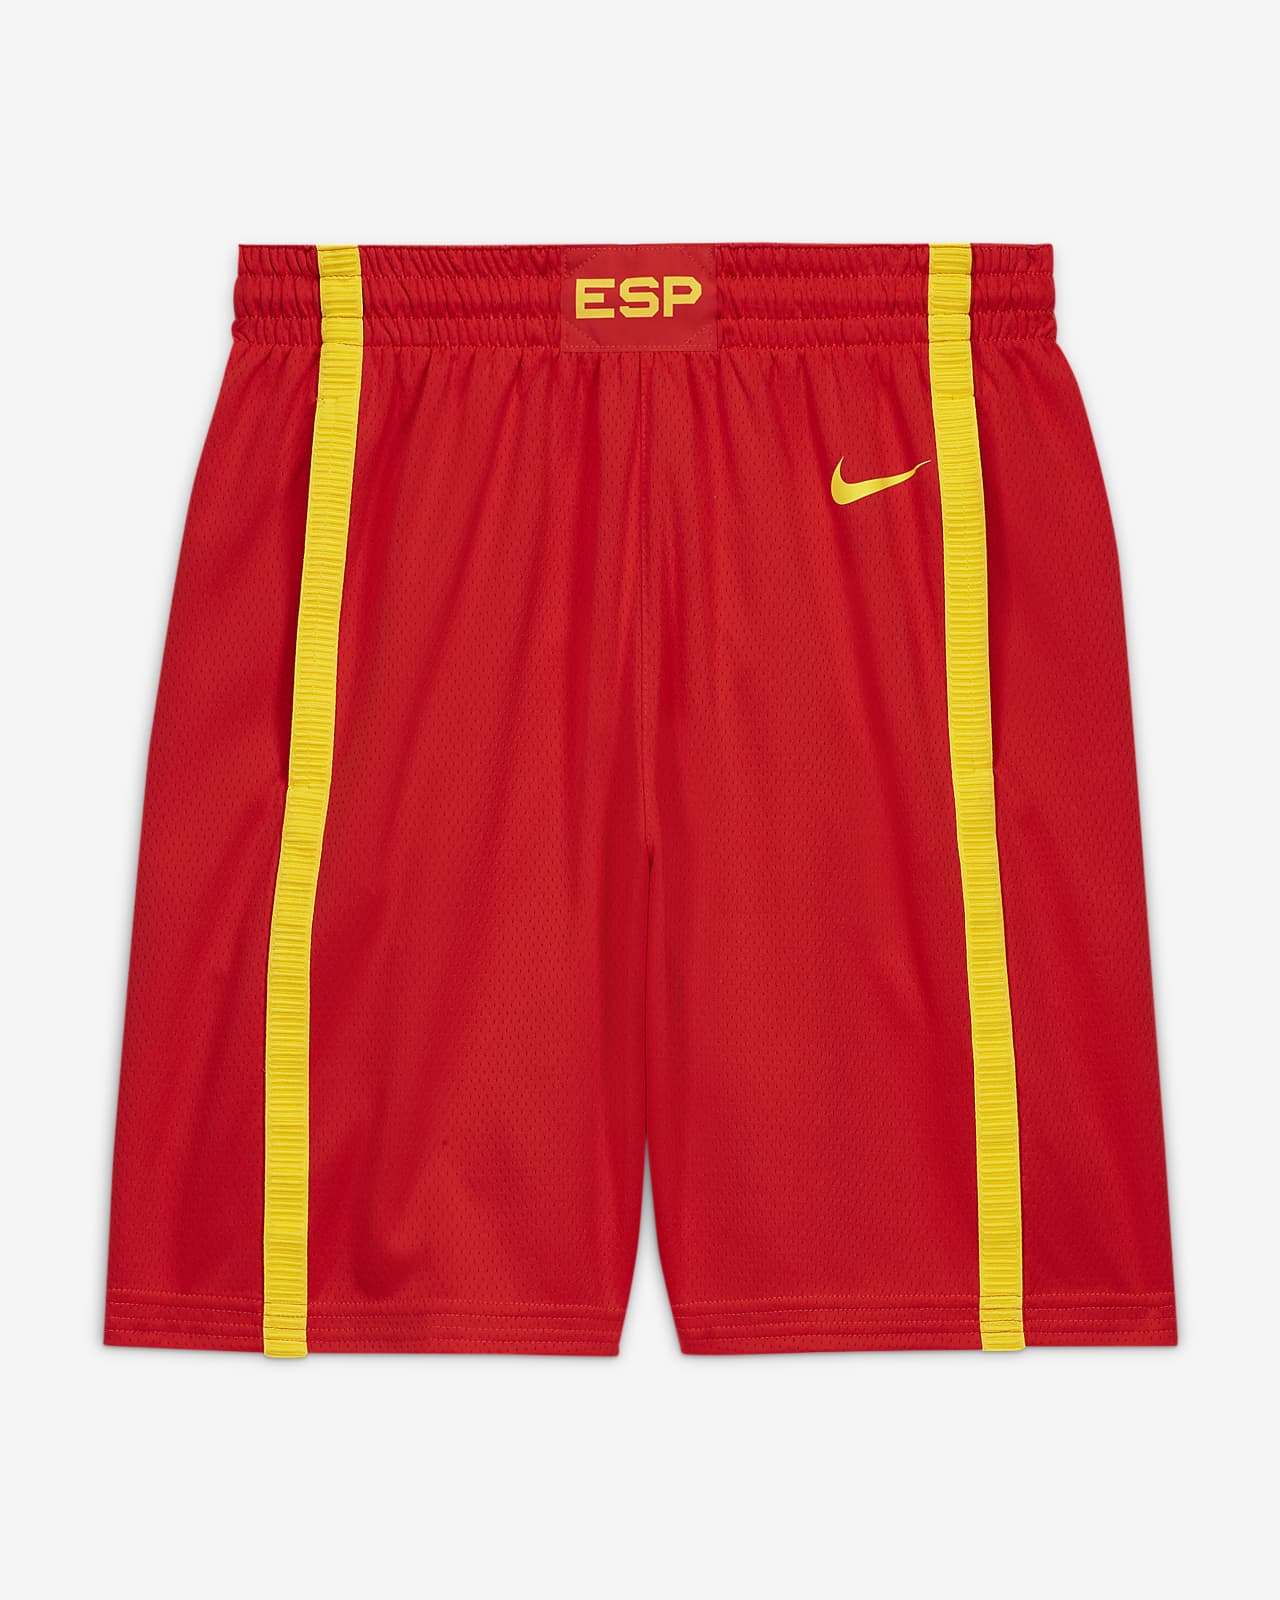 Spain Nike (Road) Limited Men's Basketball Shorts